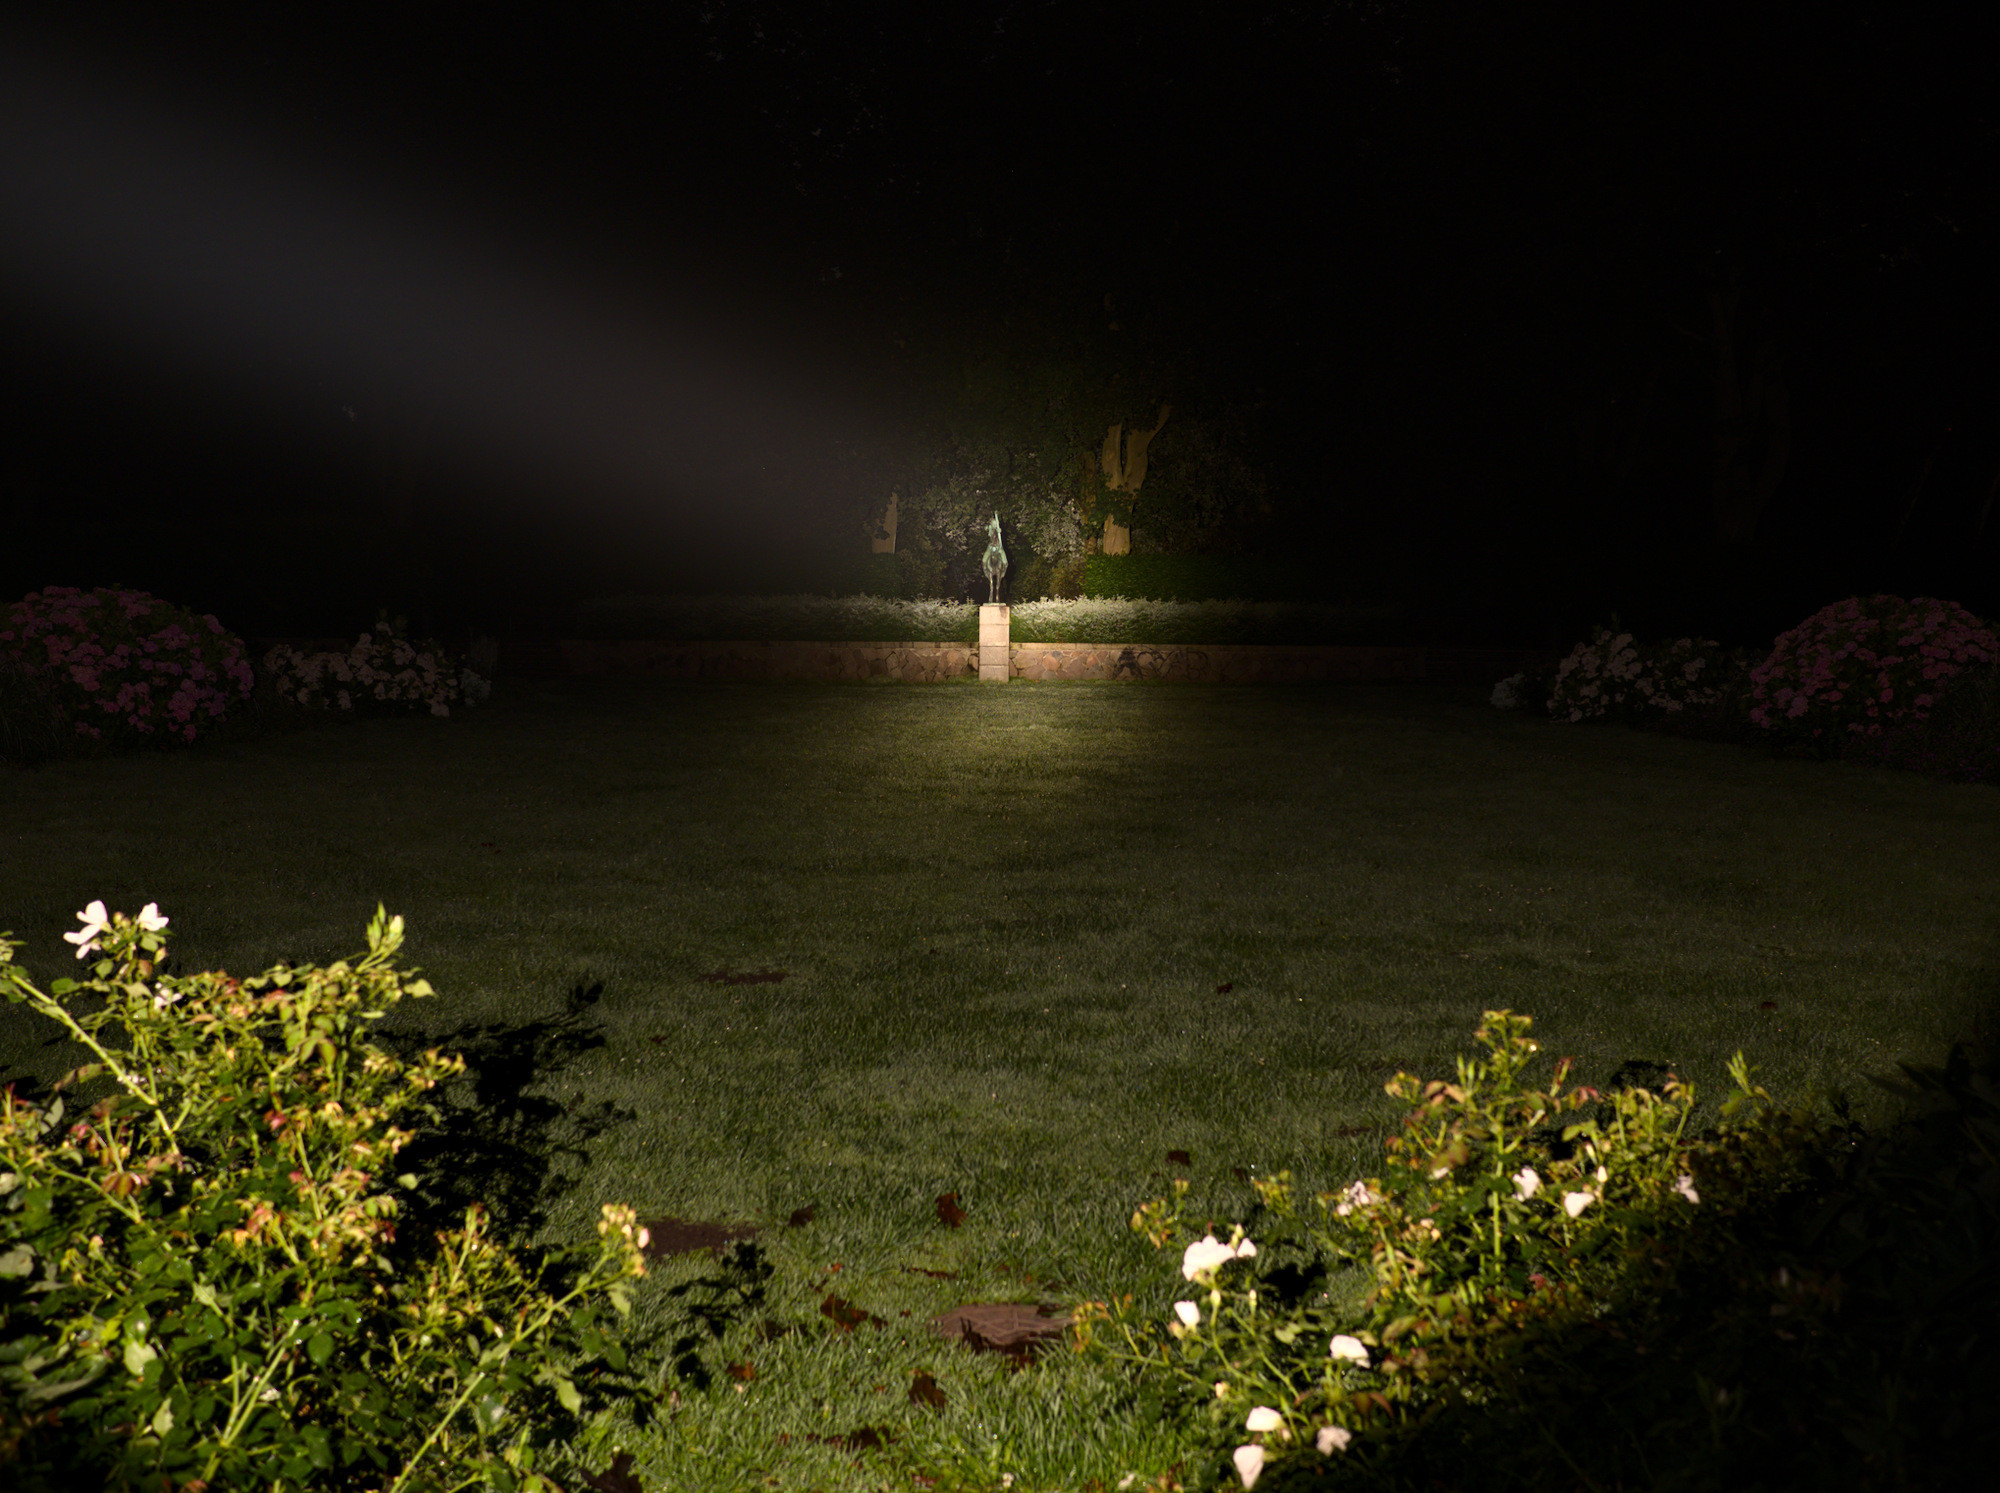 A focused flashlight beam with warm color temperature illuminates a distant statue